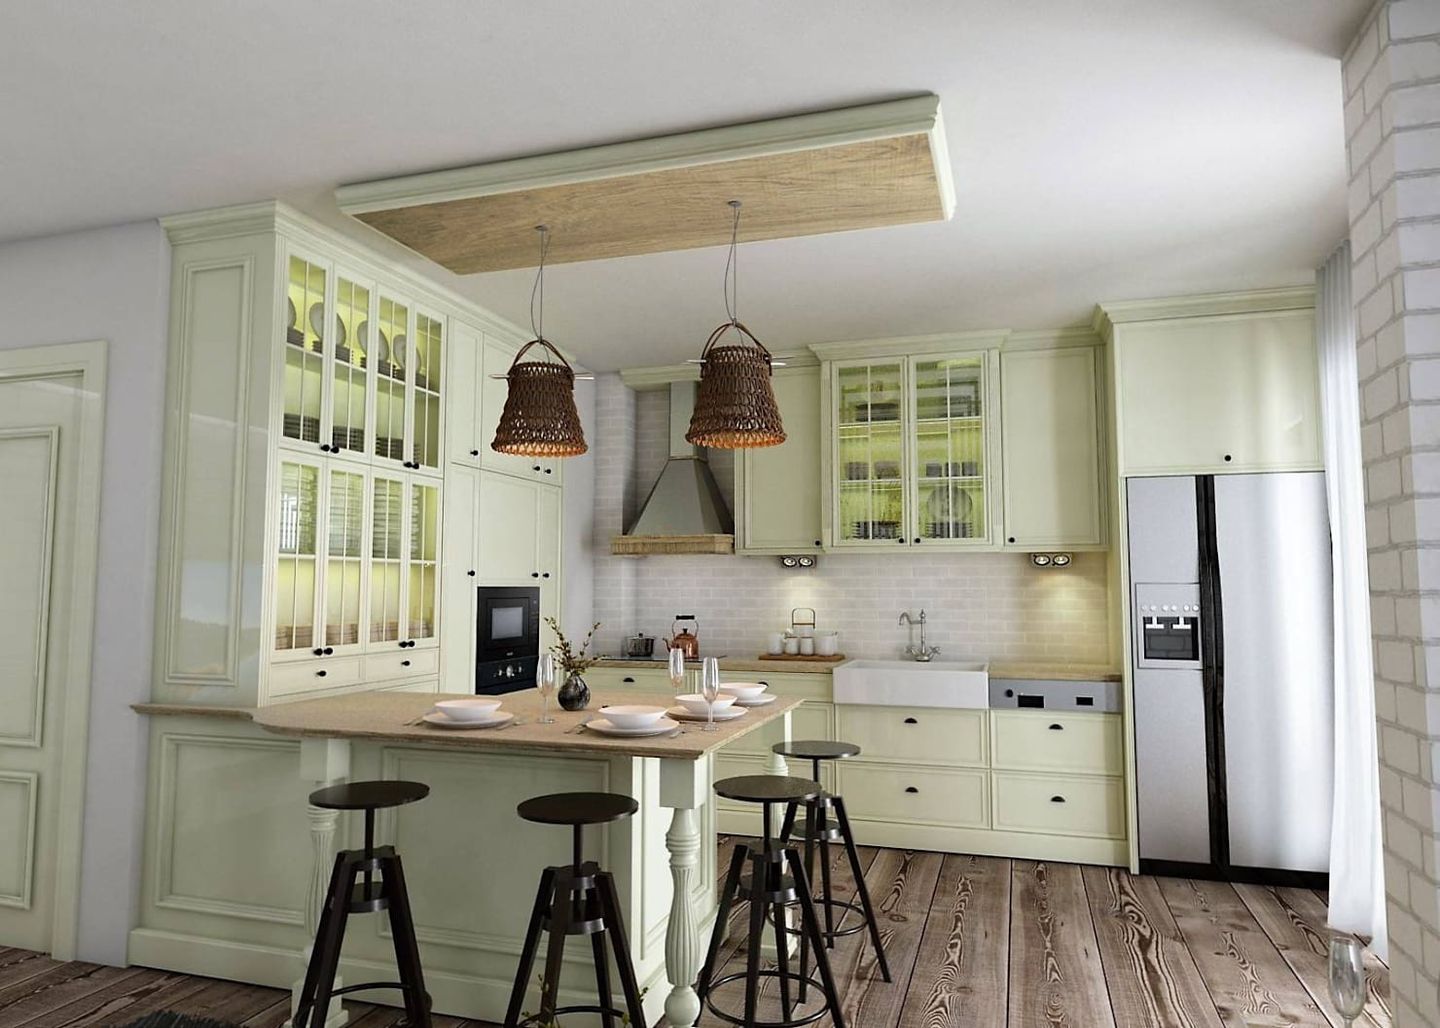 Tampilan dapur 3x2 gaya klasik sangat elegan lewat warna green sage muda pada kitchen set-nya.